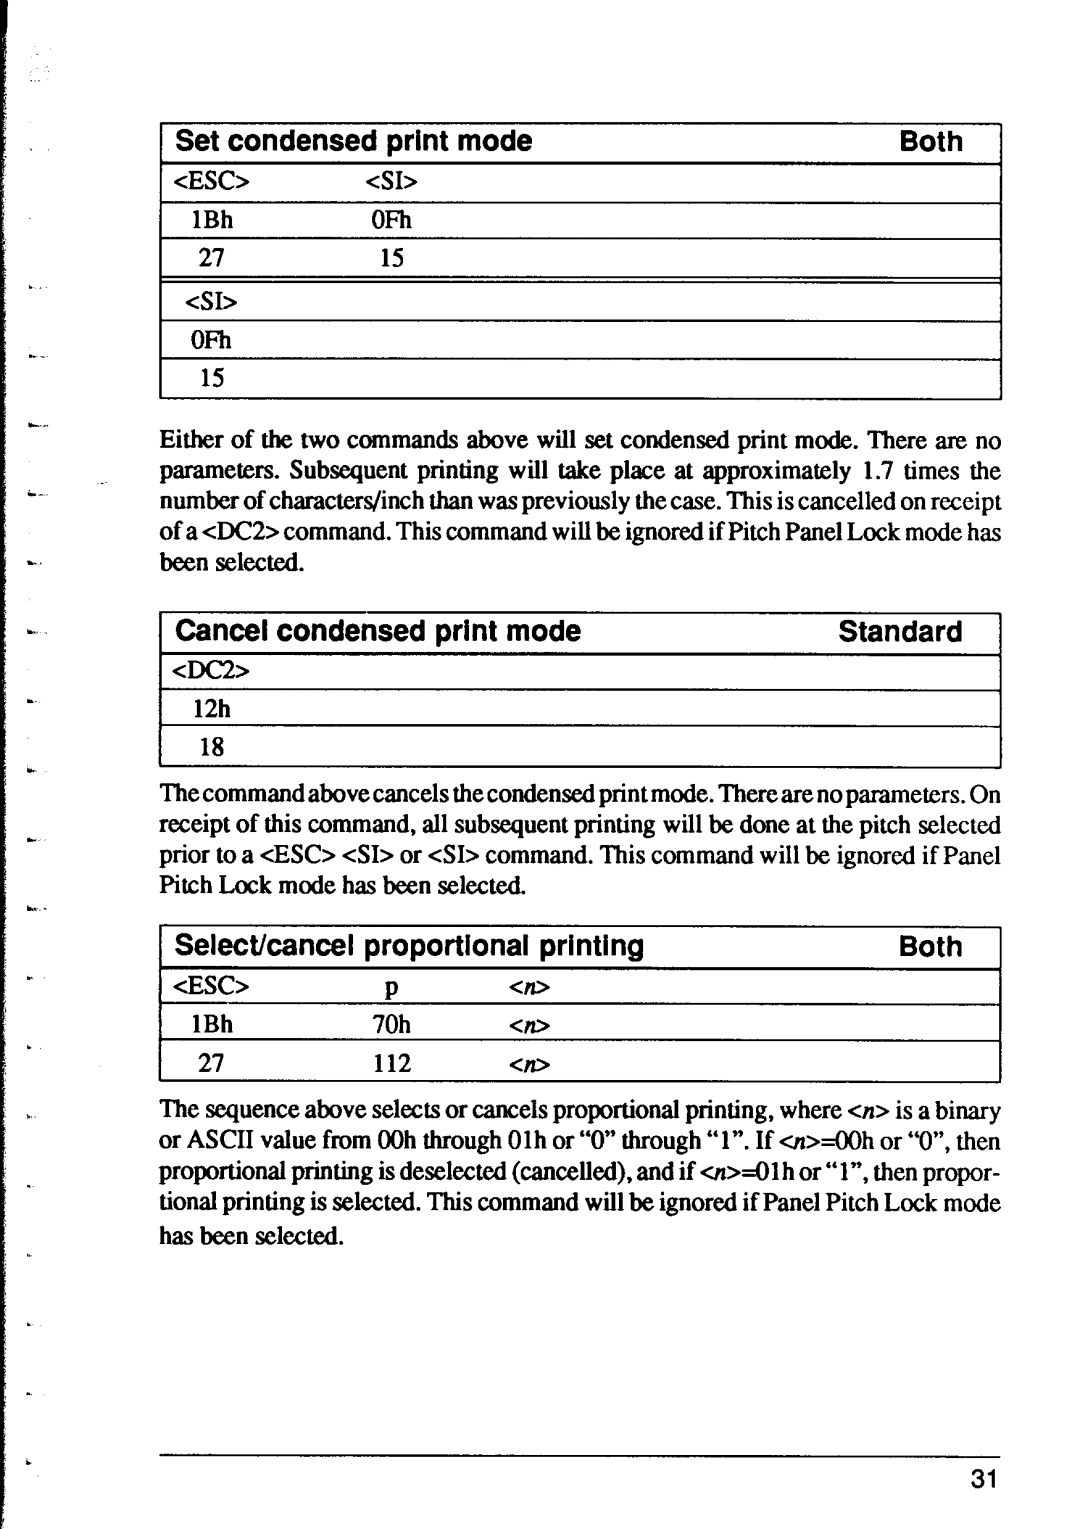 Star Micronics XR-1000 Set condensed print mode, 1Cancel condensed print mode, Select/cancel, proportional printing, Both 